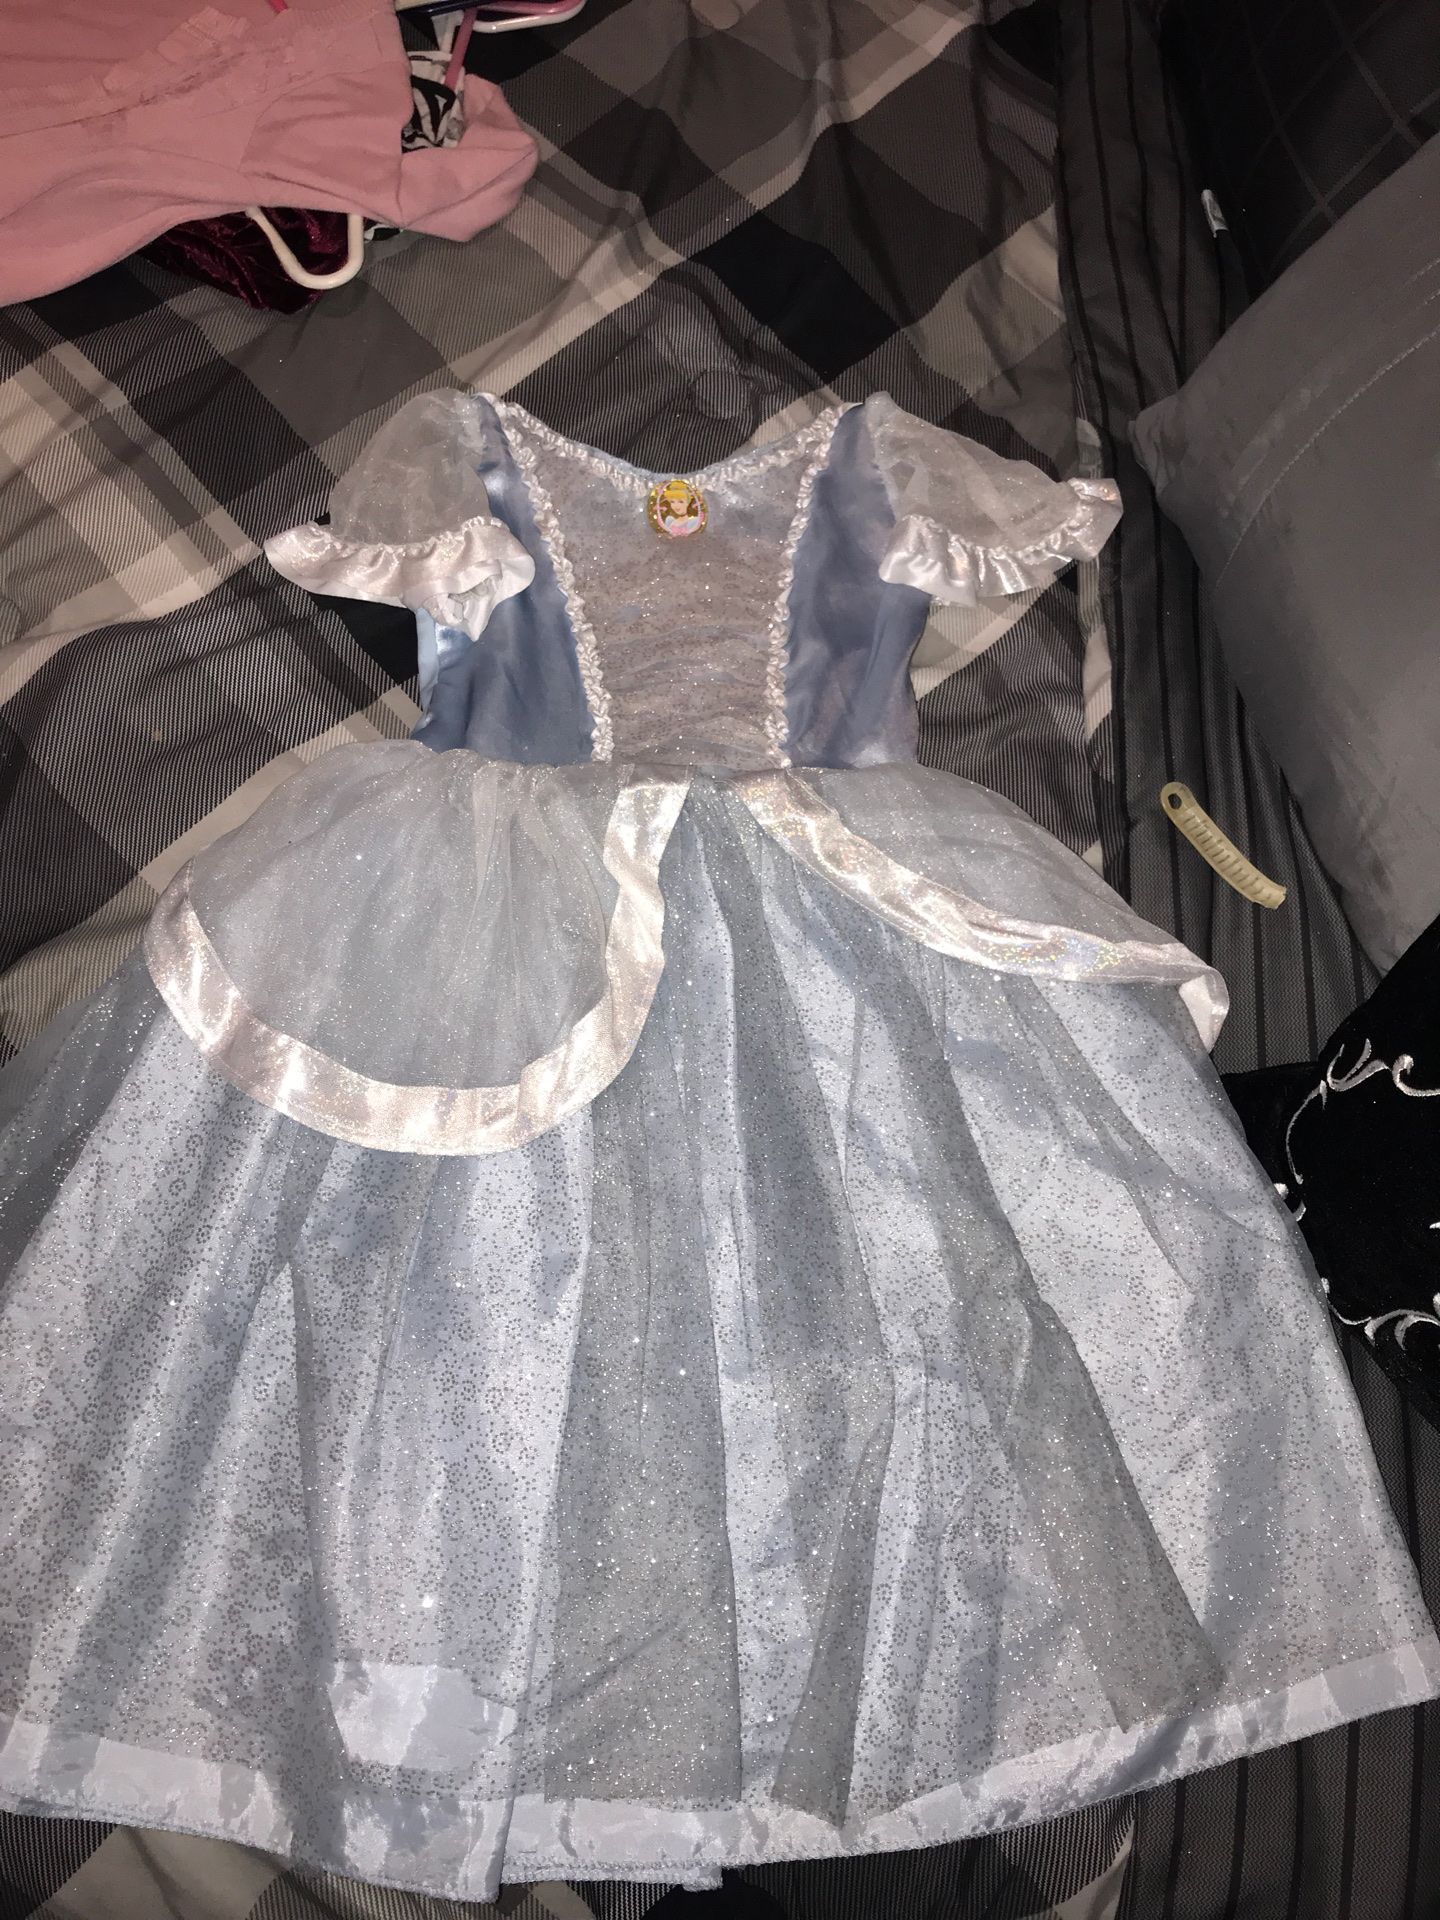 Kids size small Cinderella dress up